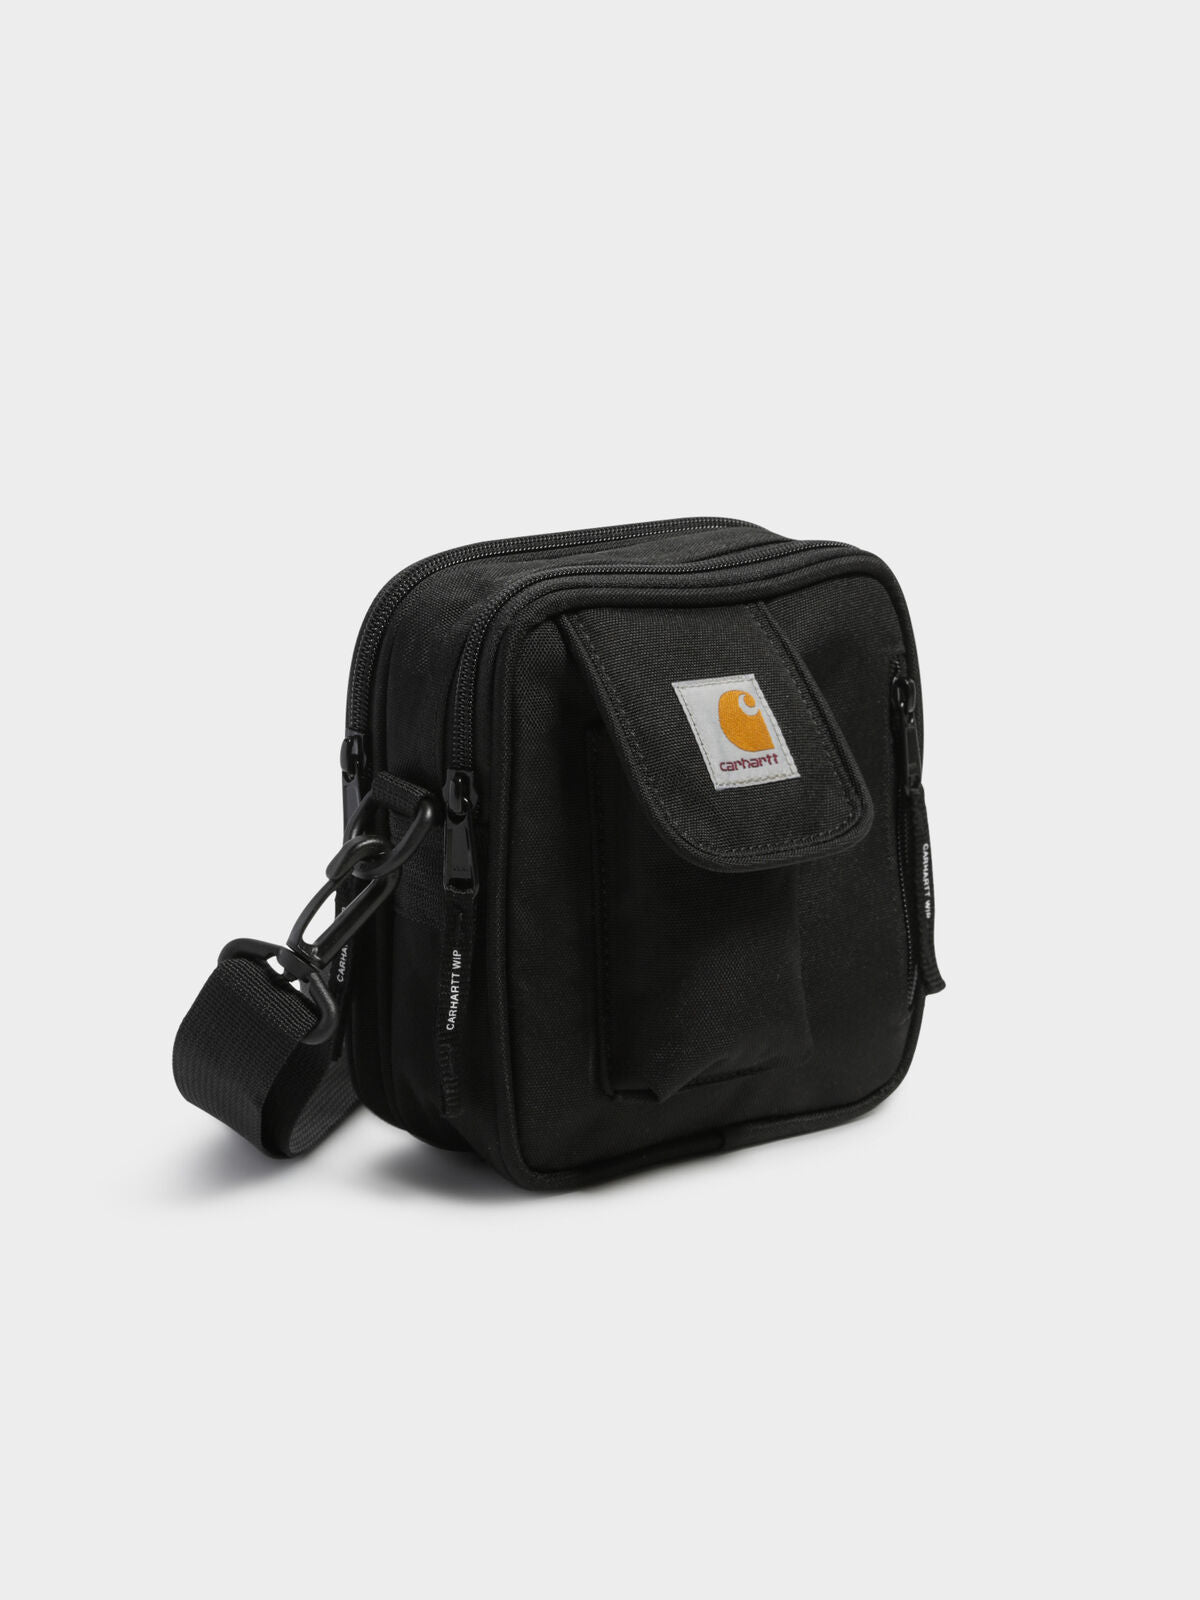 Carhartt WIP Essentials Bag